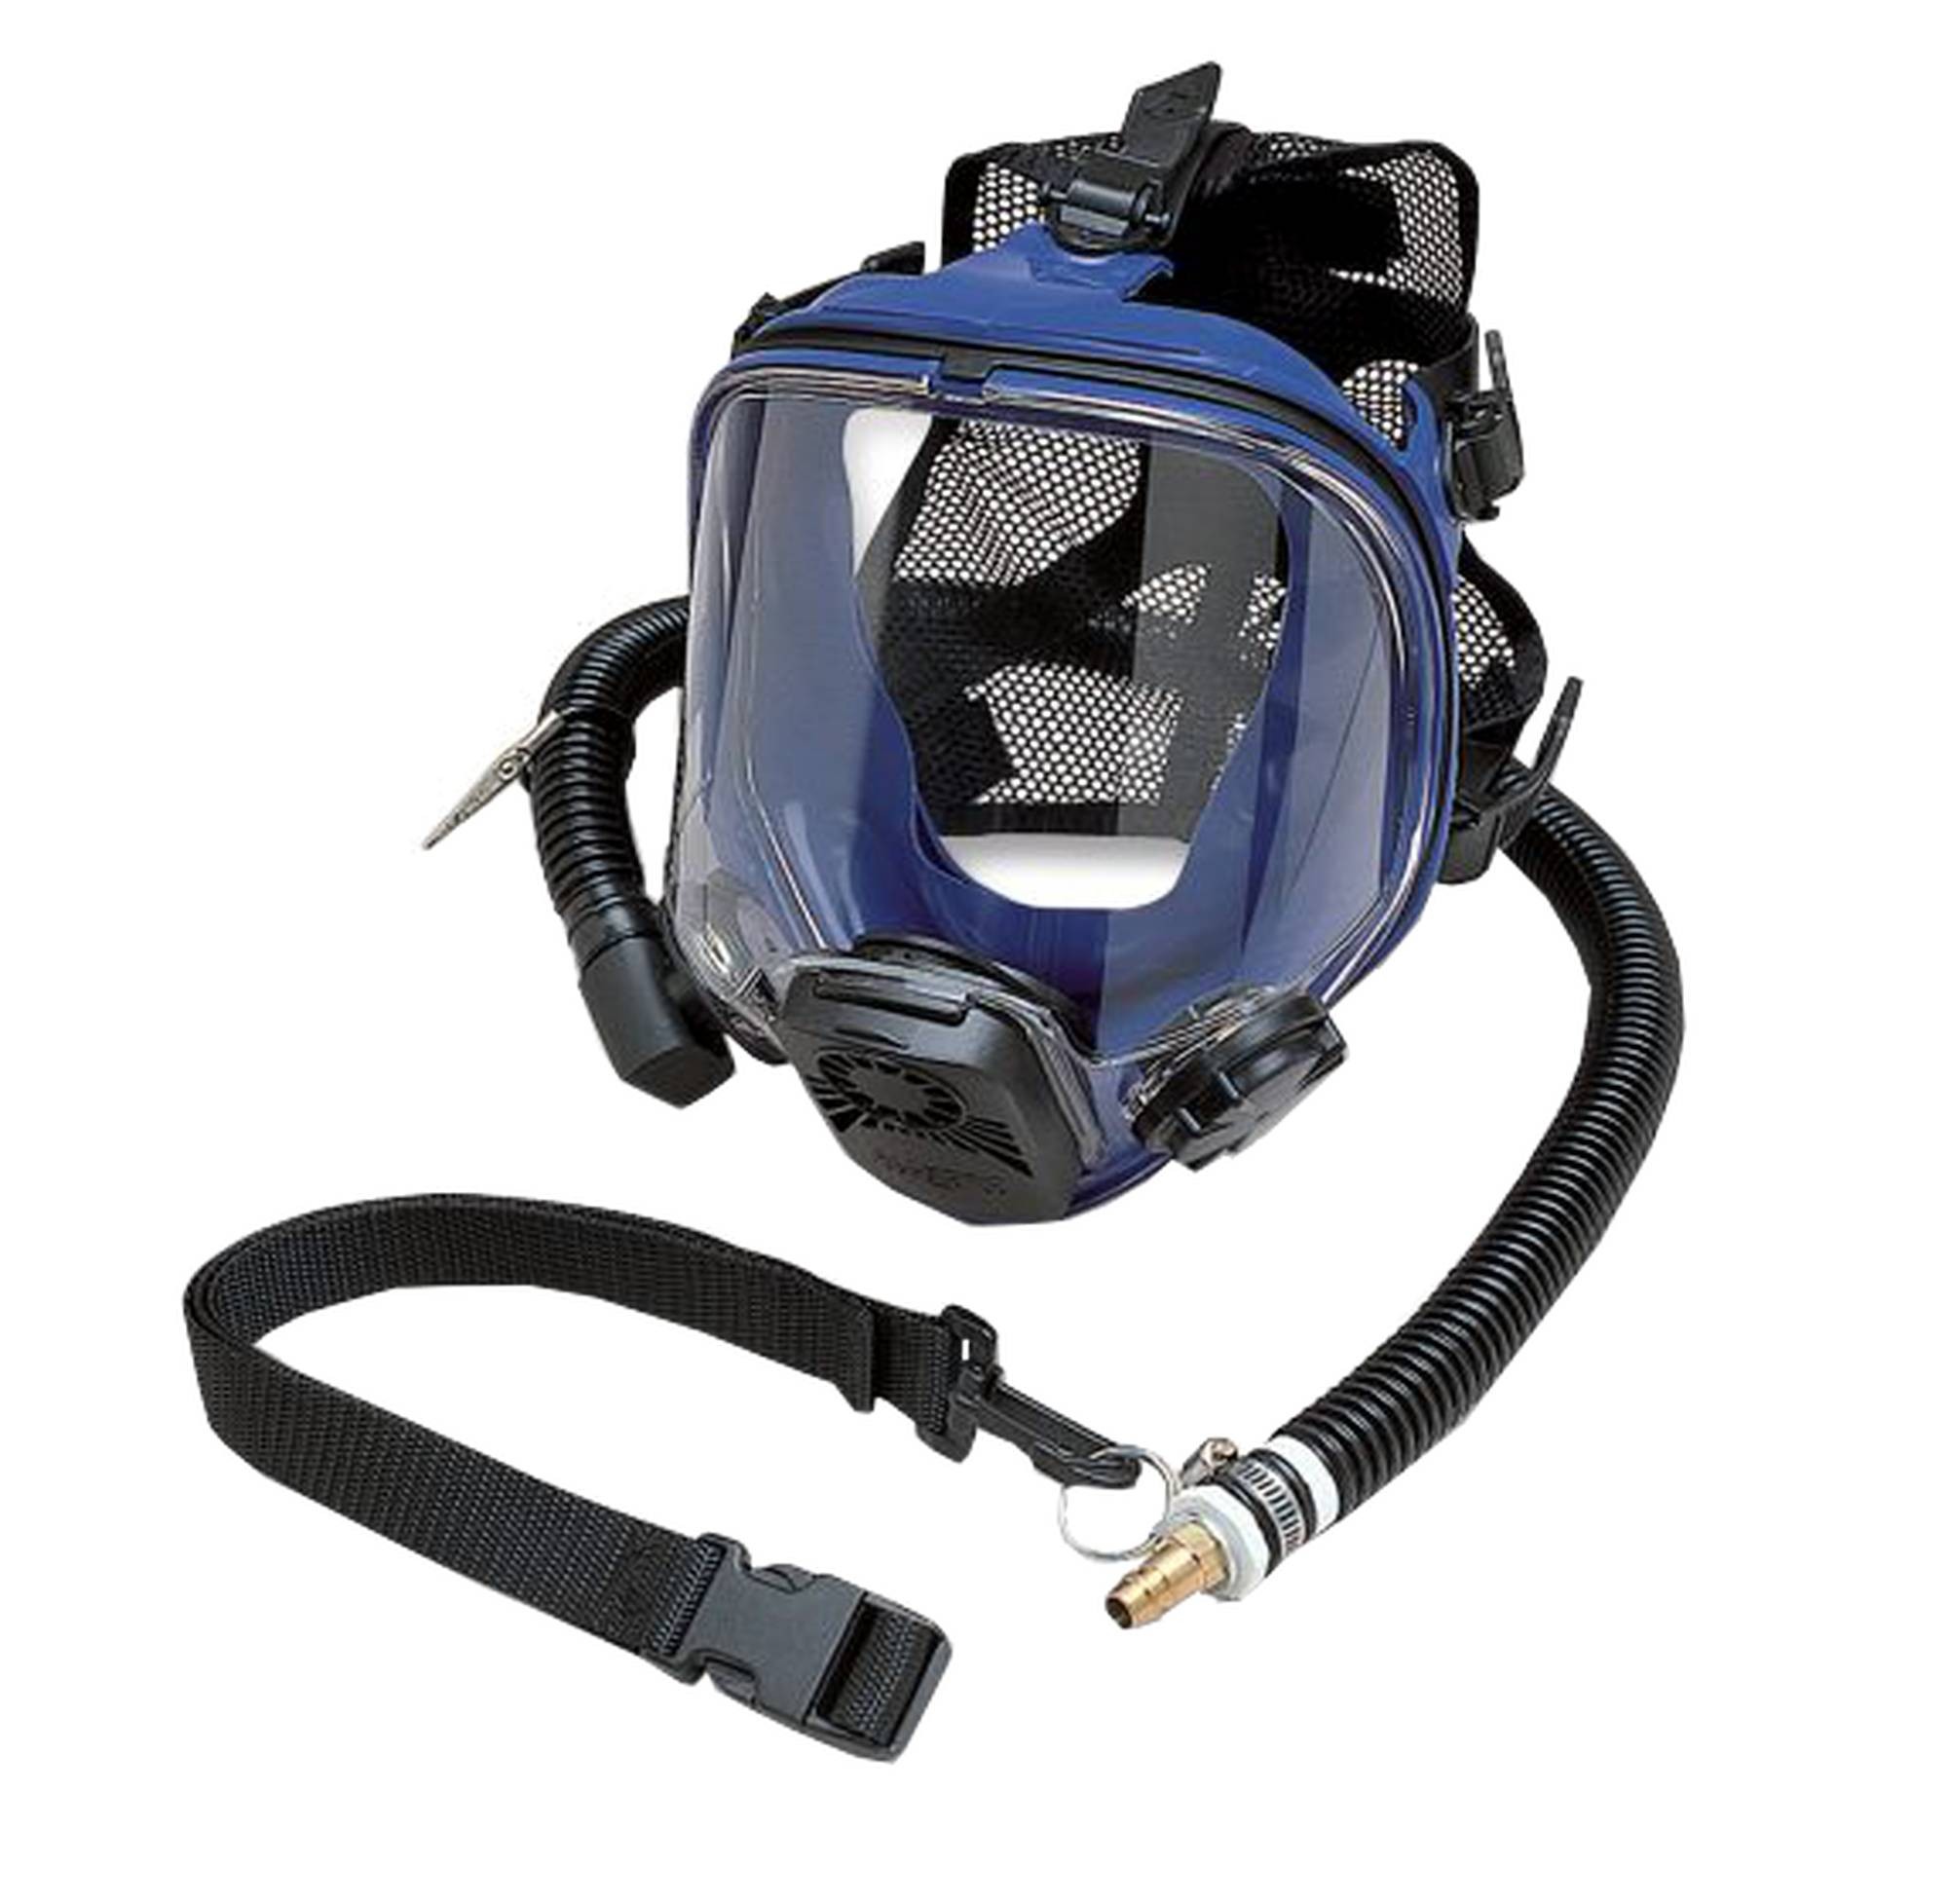 Set includes a full-face respirator 